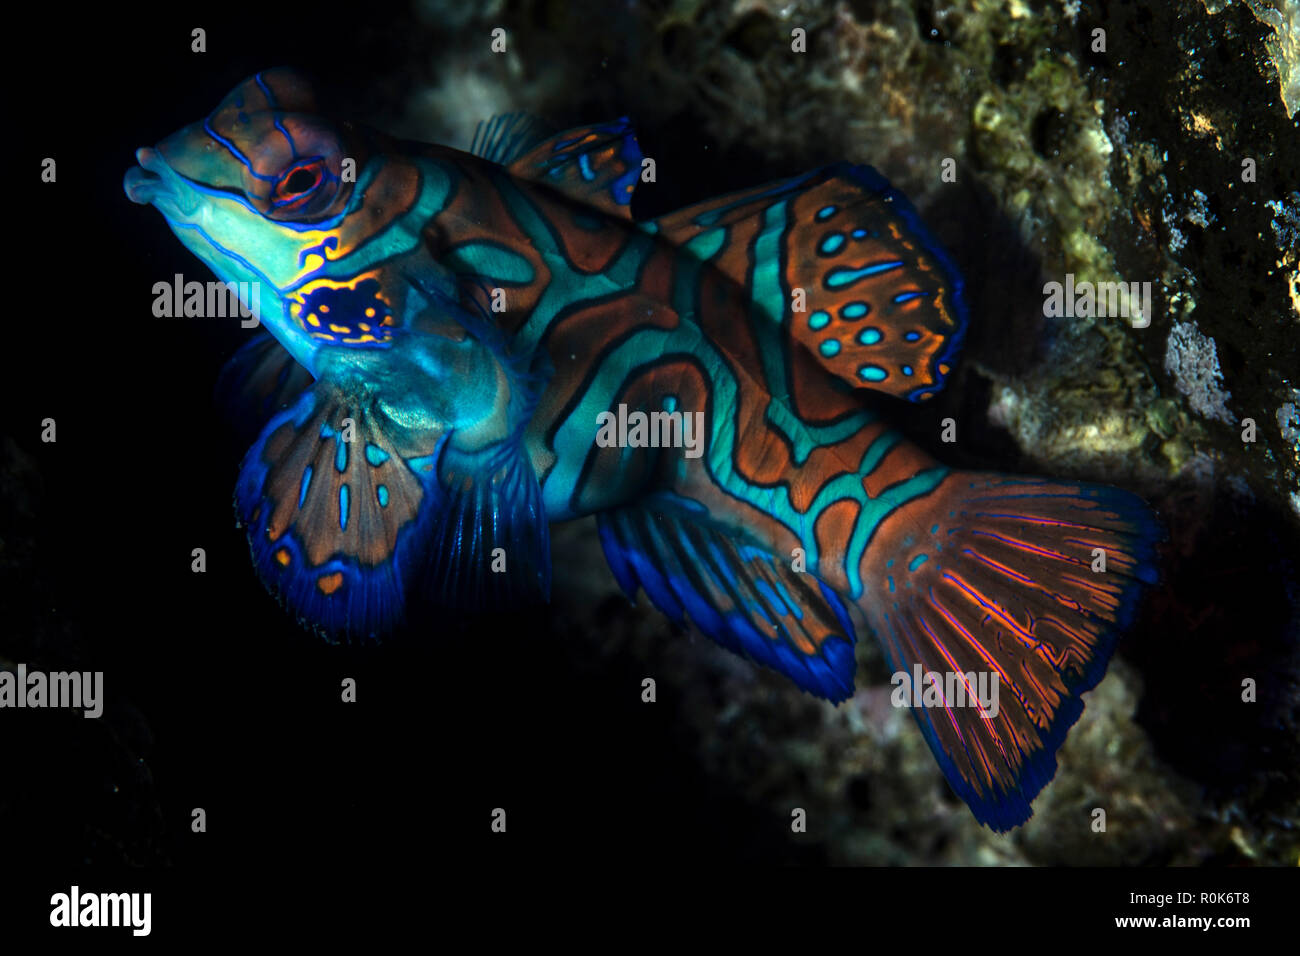 Colorful mandarinfish (Synchiropus spledidus). Stock Photo